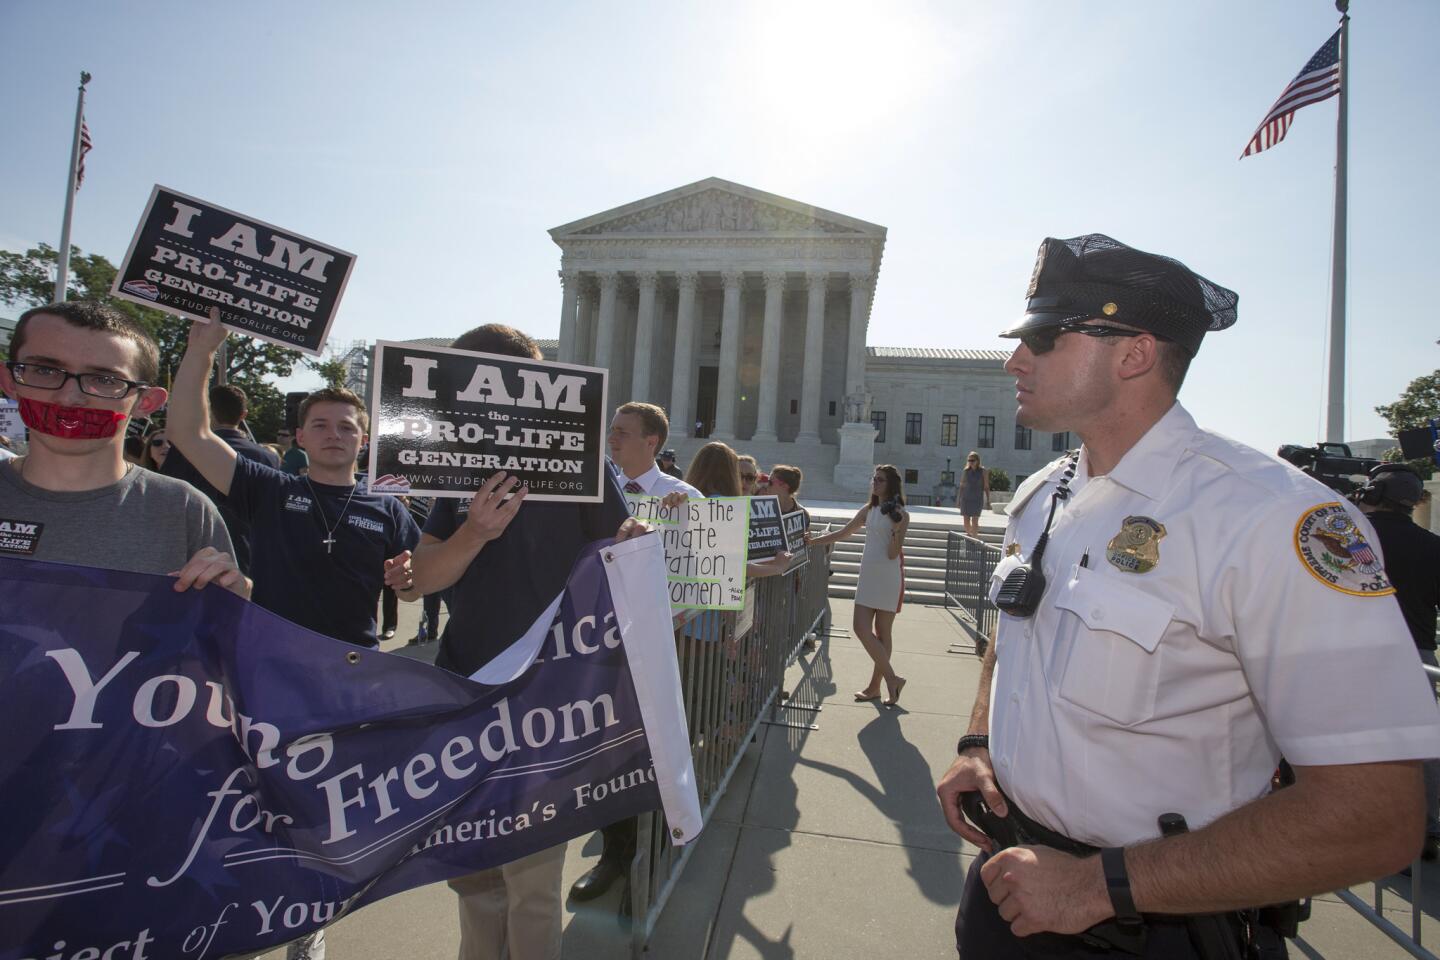 Supreme Court overturns Texas abortion restrictions